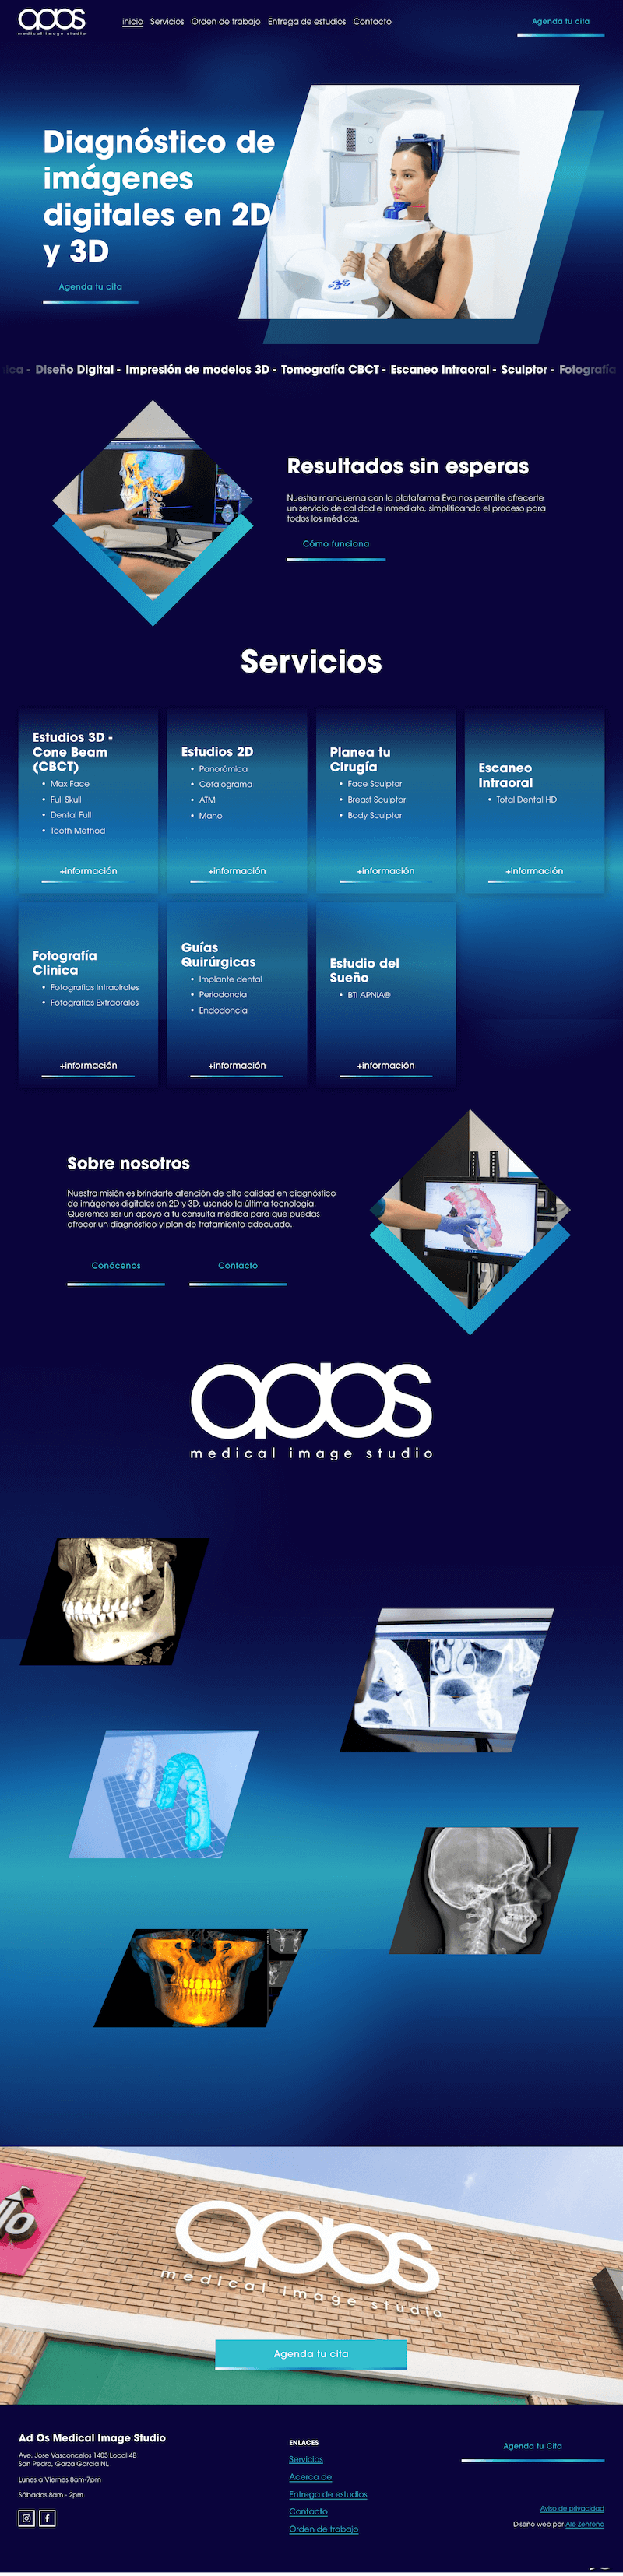 Ad-Os-Medical-Image-Studio.png